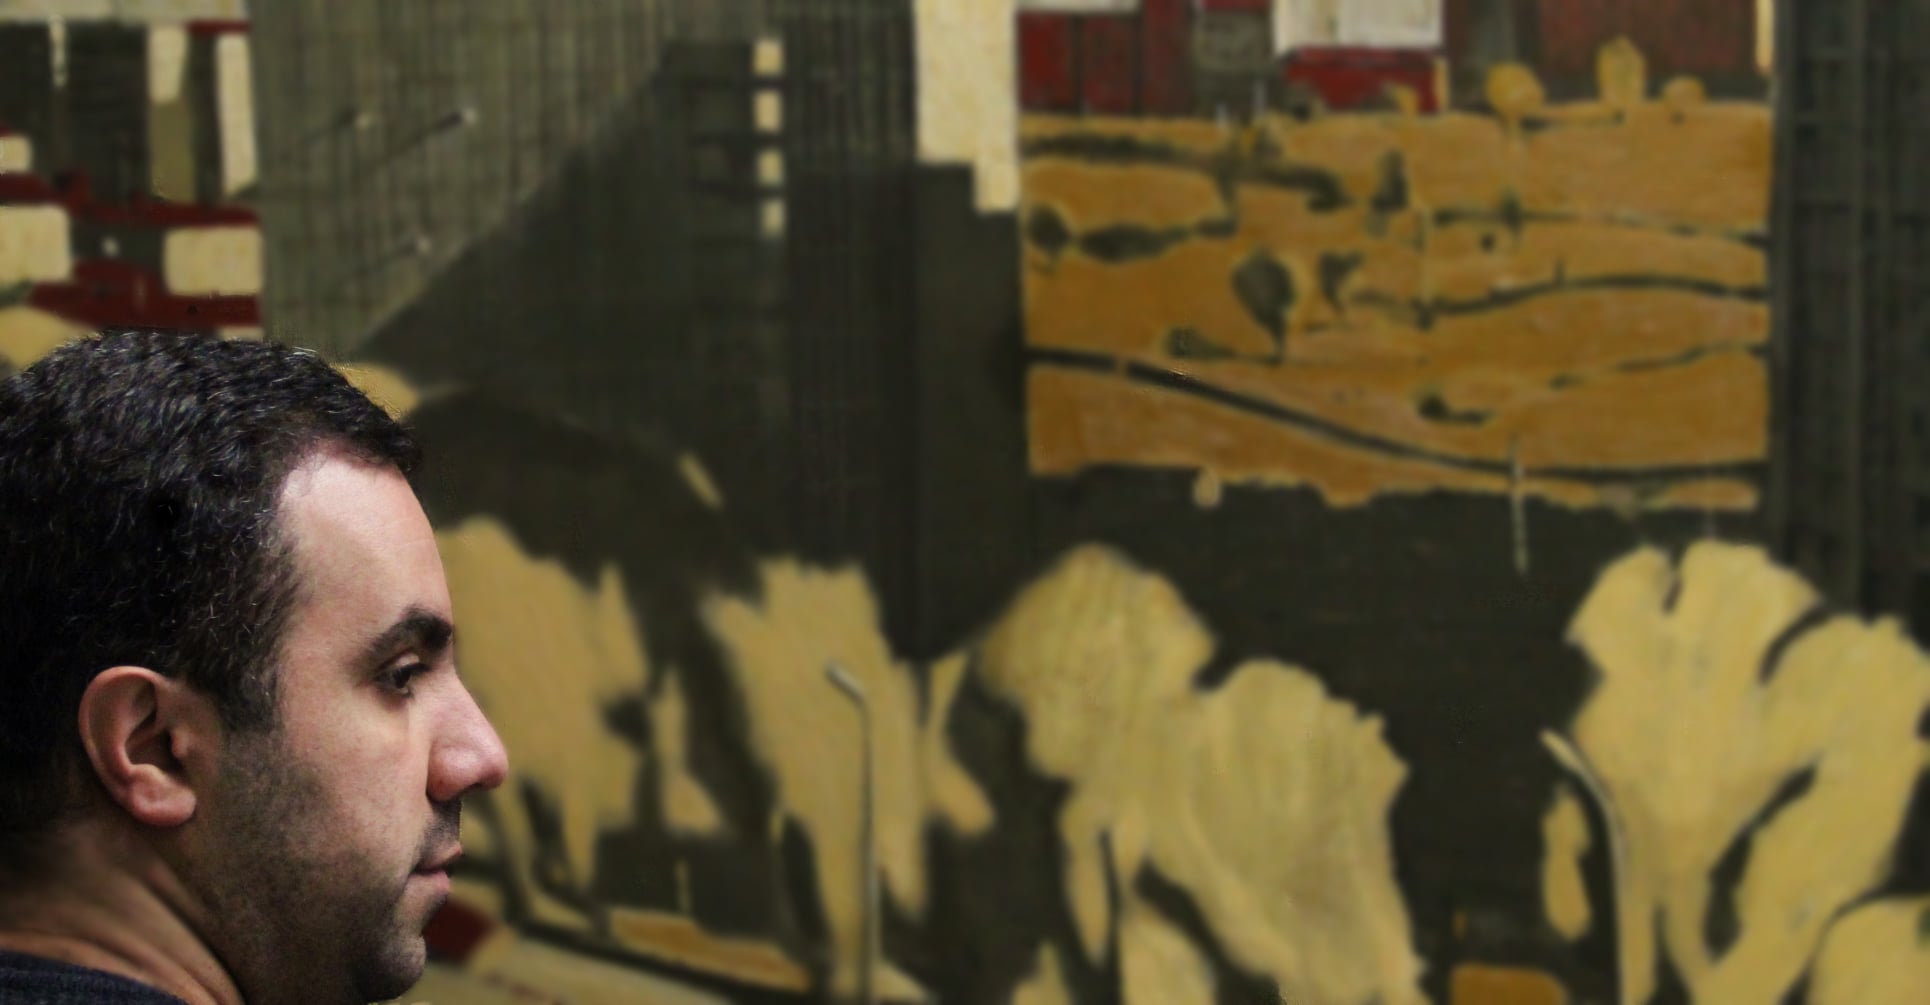 Art 1 - Երևանյան միապաղաղ բակերի թաքուն հմայքները [Արթուր Հովհաննիսյանի գեղանկարչական շարքի մասին]